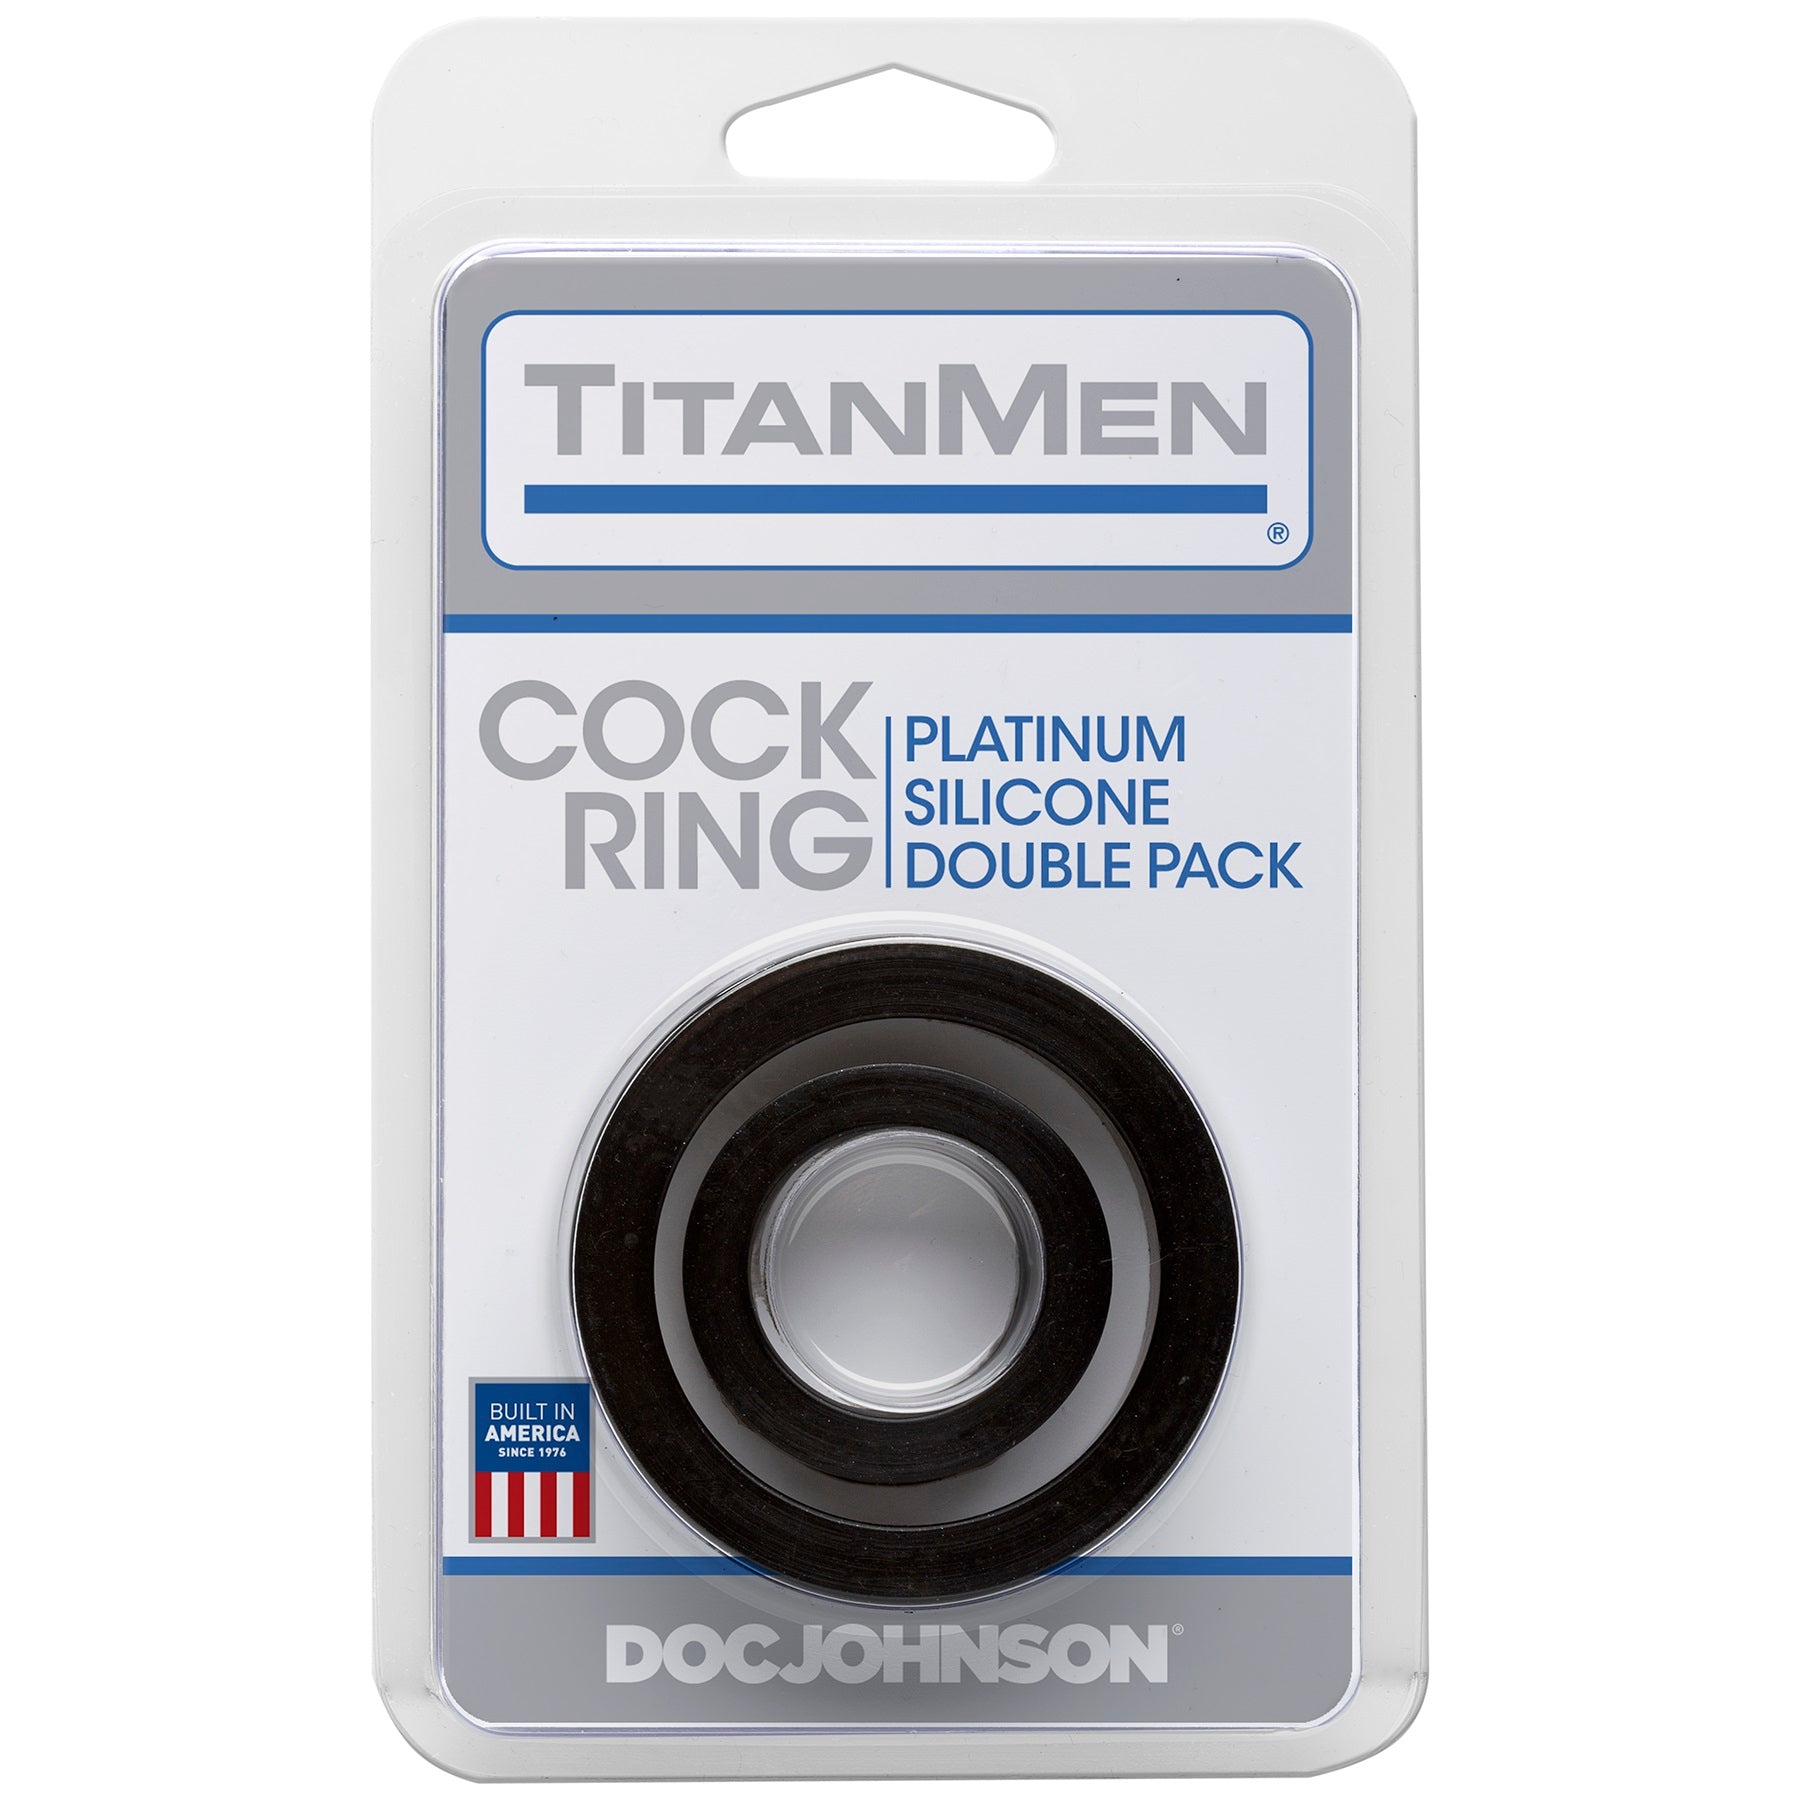 Titanmen Cock Ring Platinum Silicone  Double Pack - Black DJ3503-03-CD